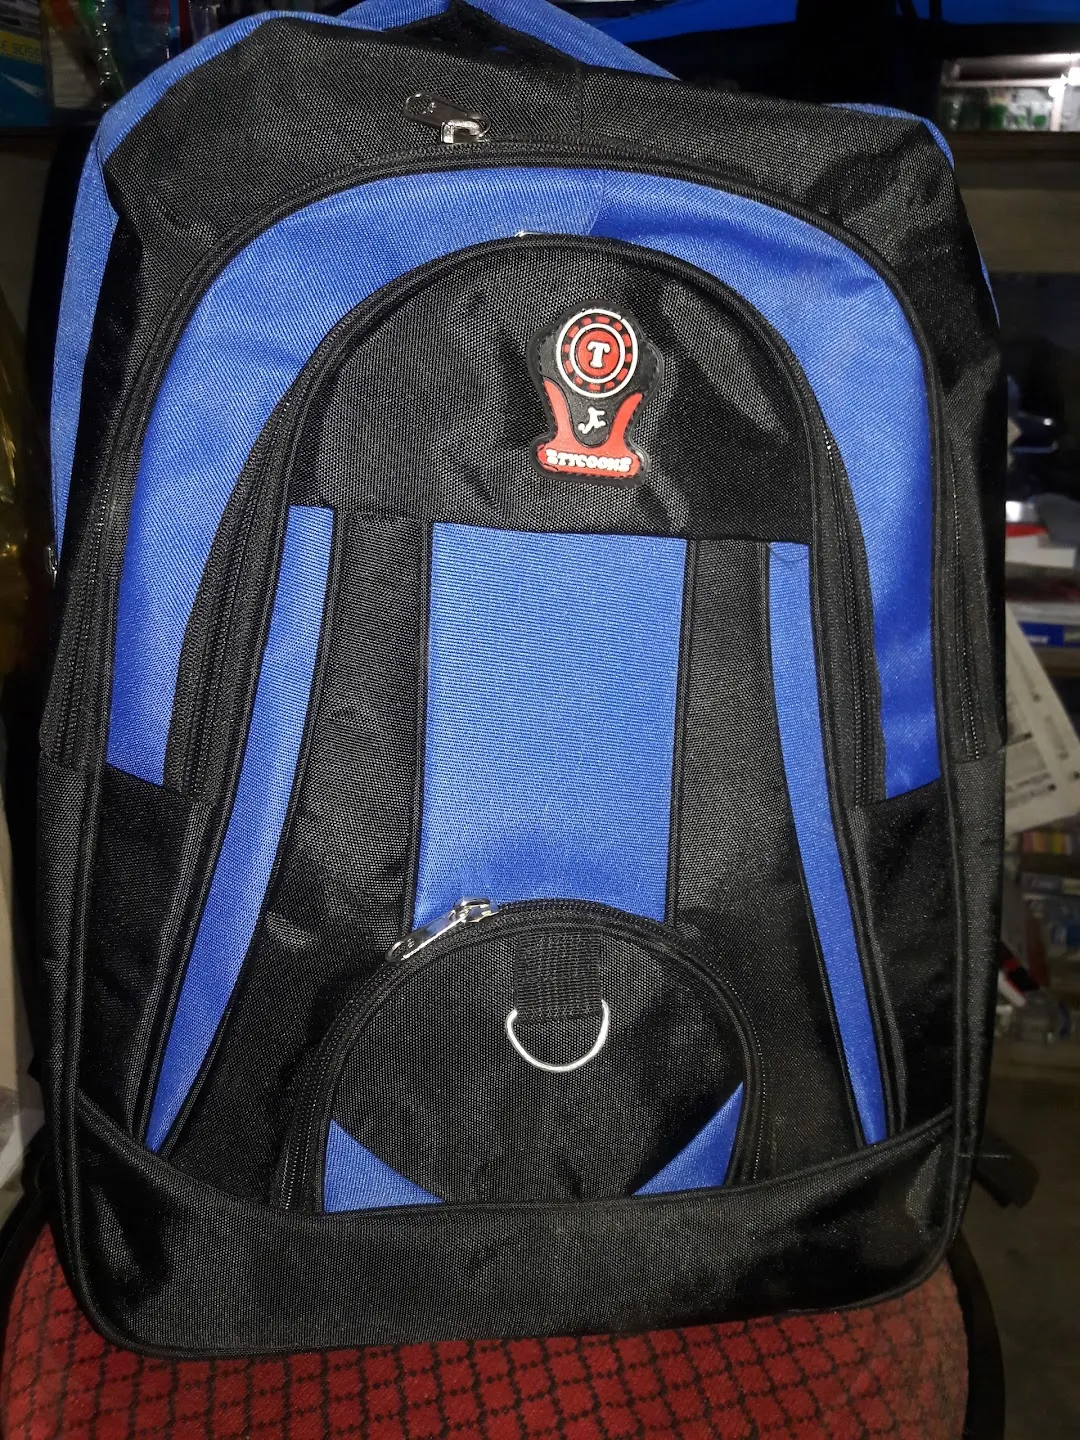 Infinity Bags Unisex Tycoon Model 03 Backpack (Purple, 19 Inch) : Amazon.in